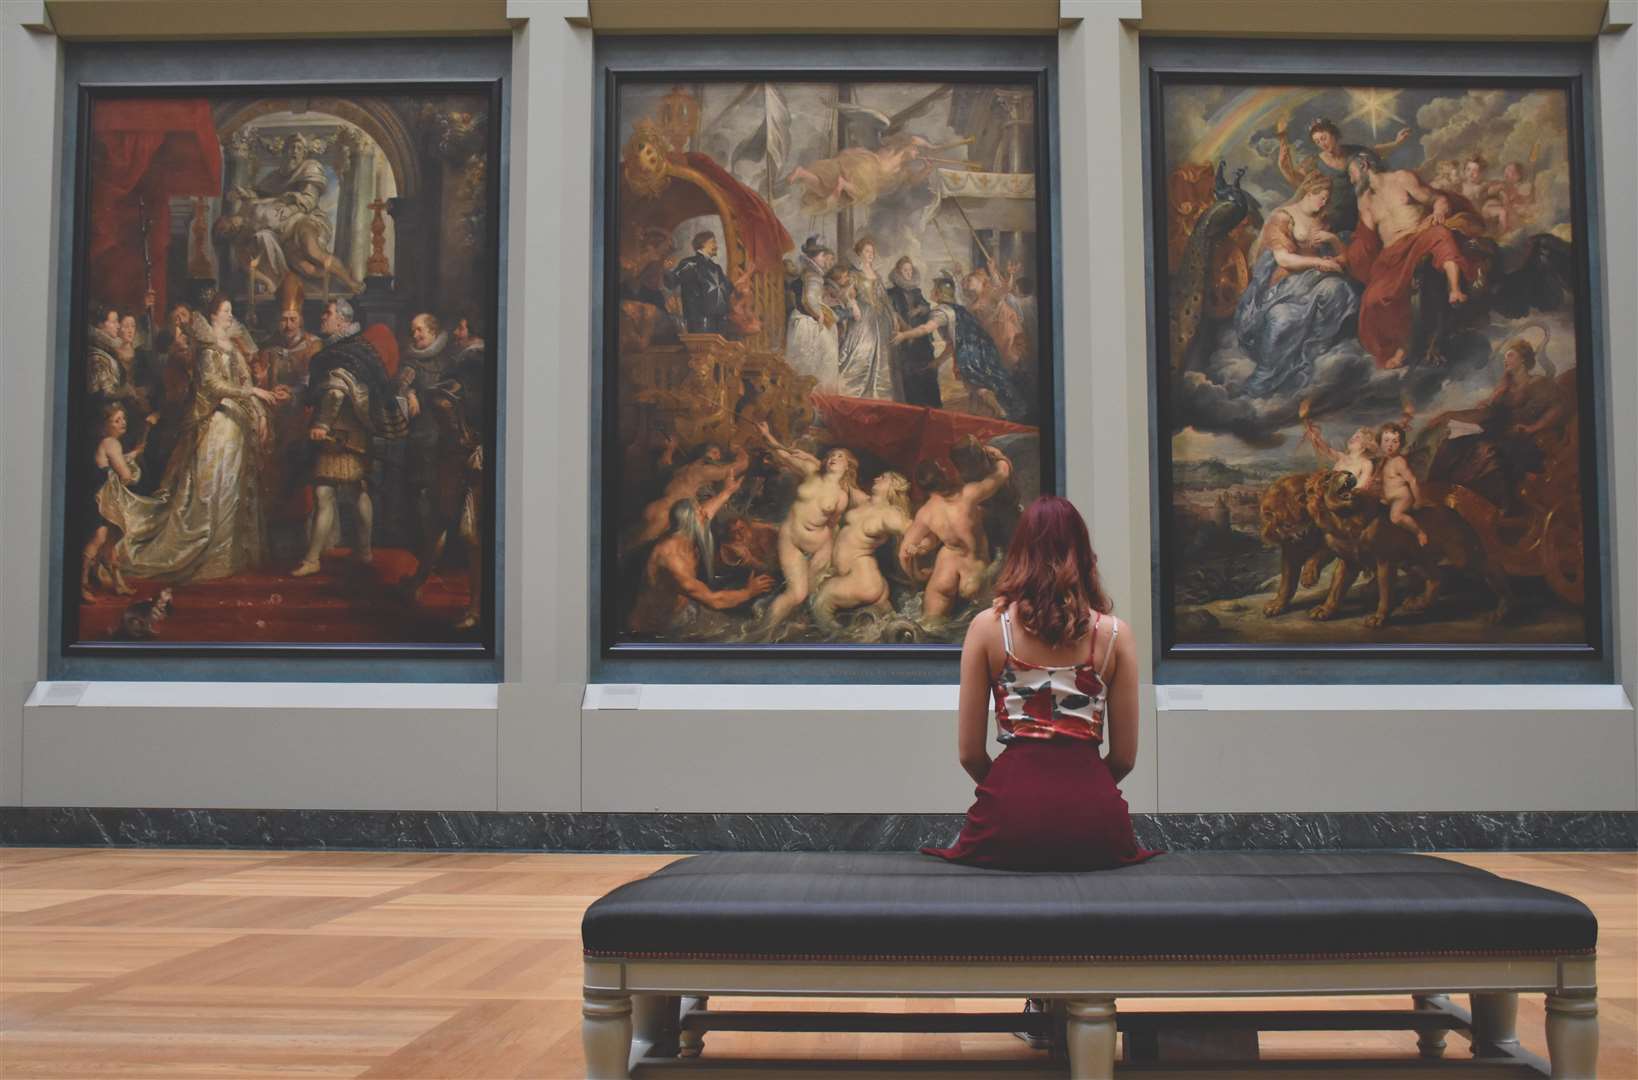 Take a virtual tour of a museum